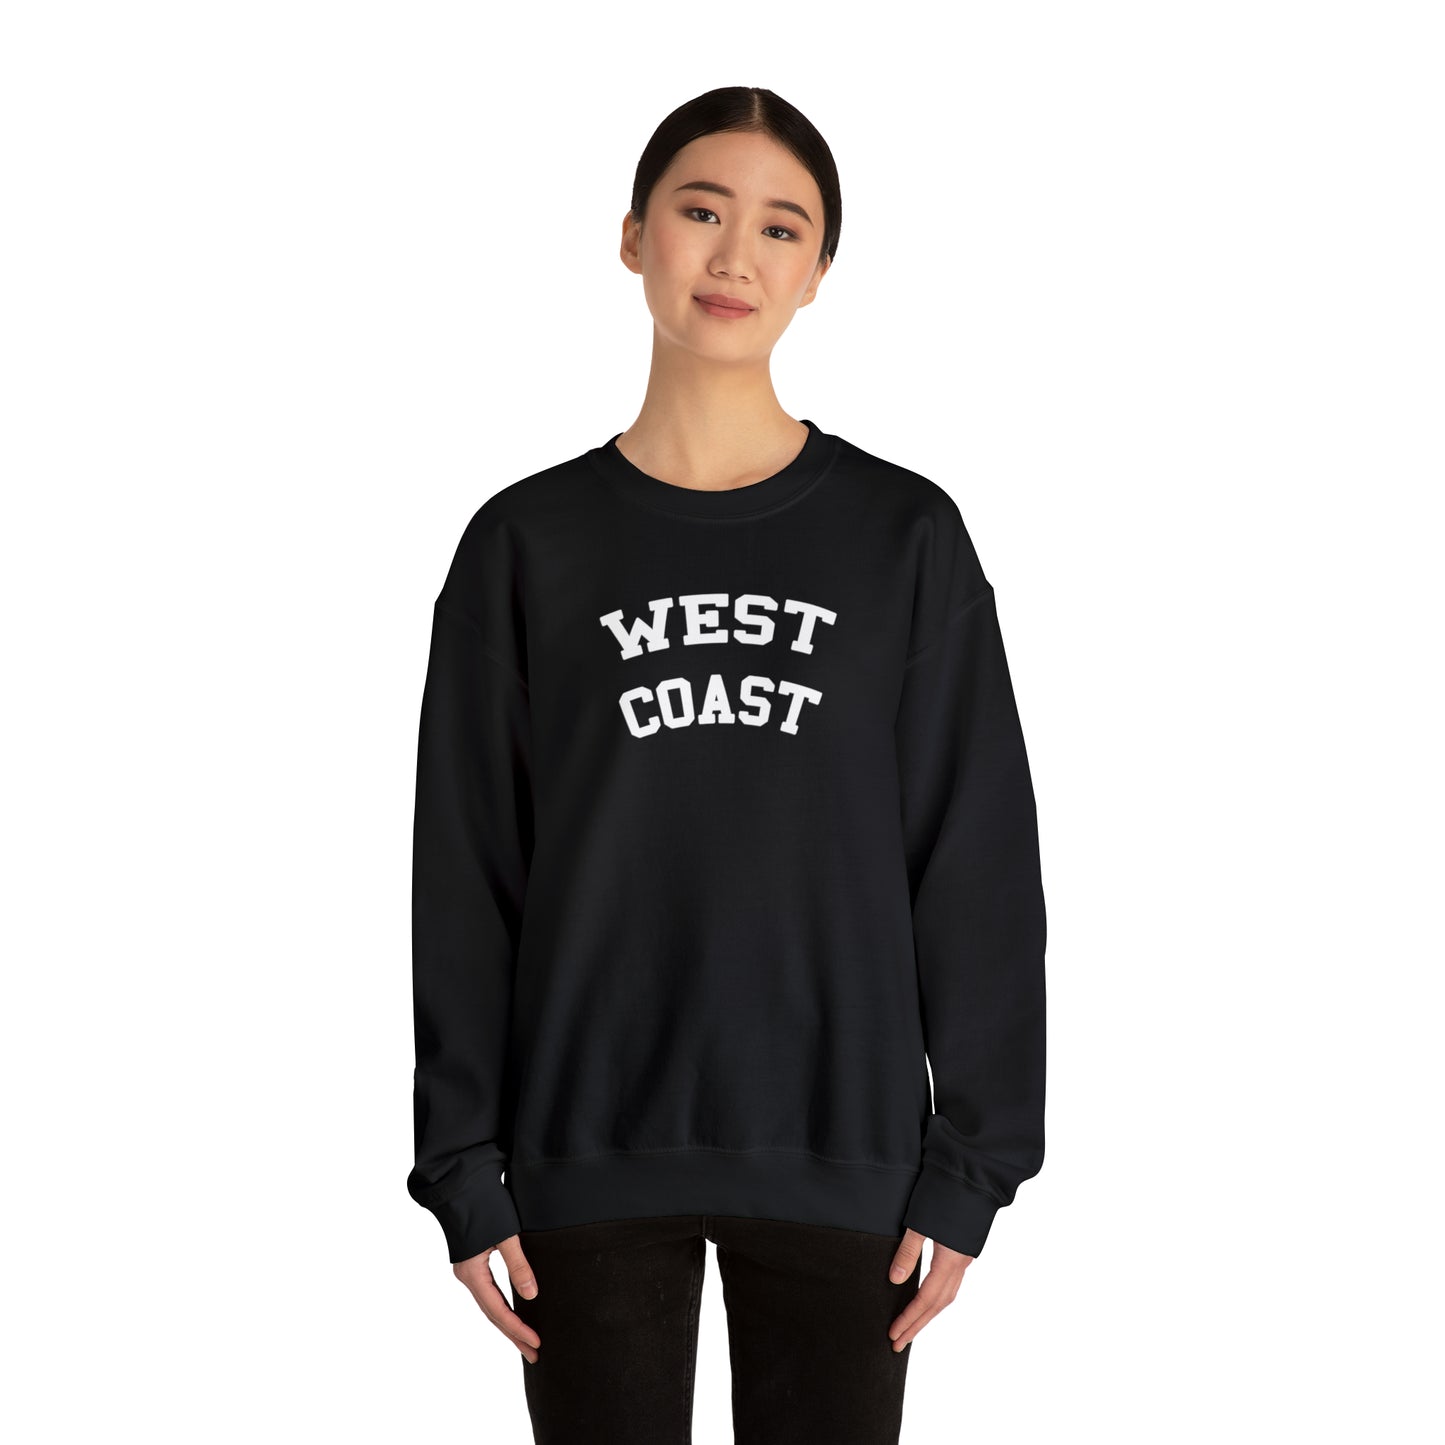 West Coast Crewneck Sweatshirt